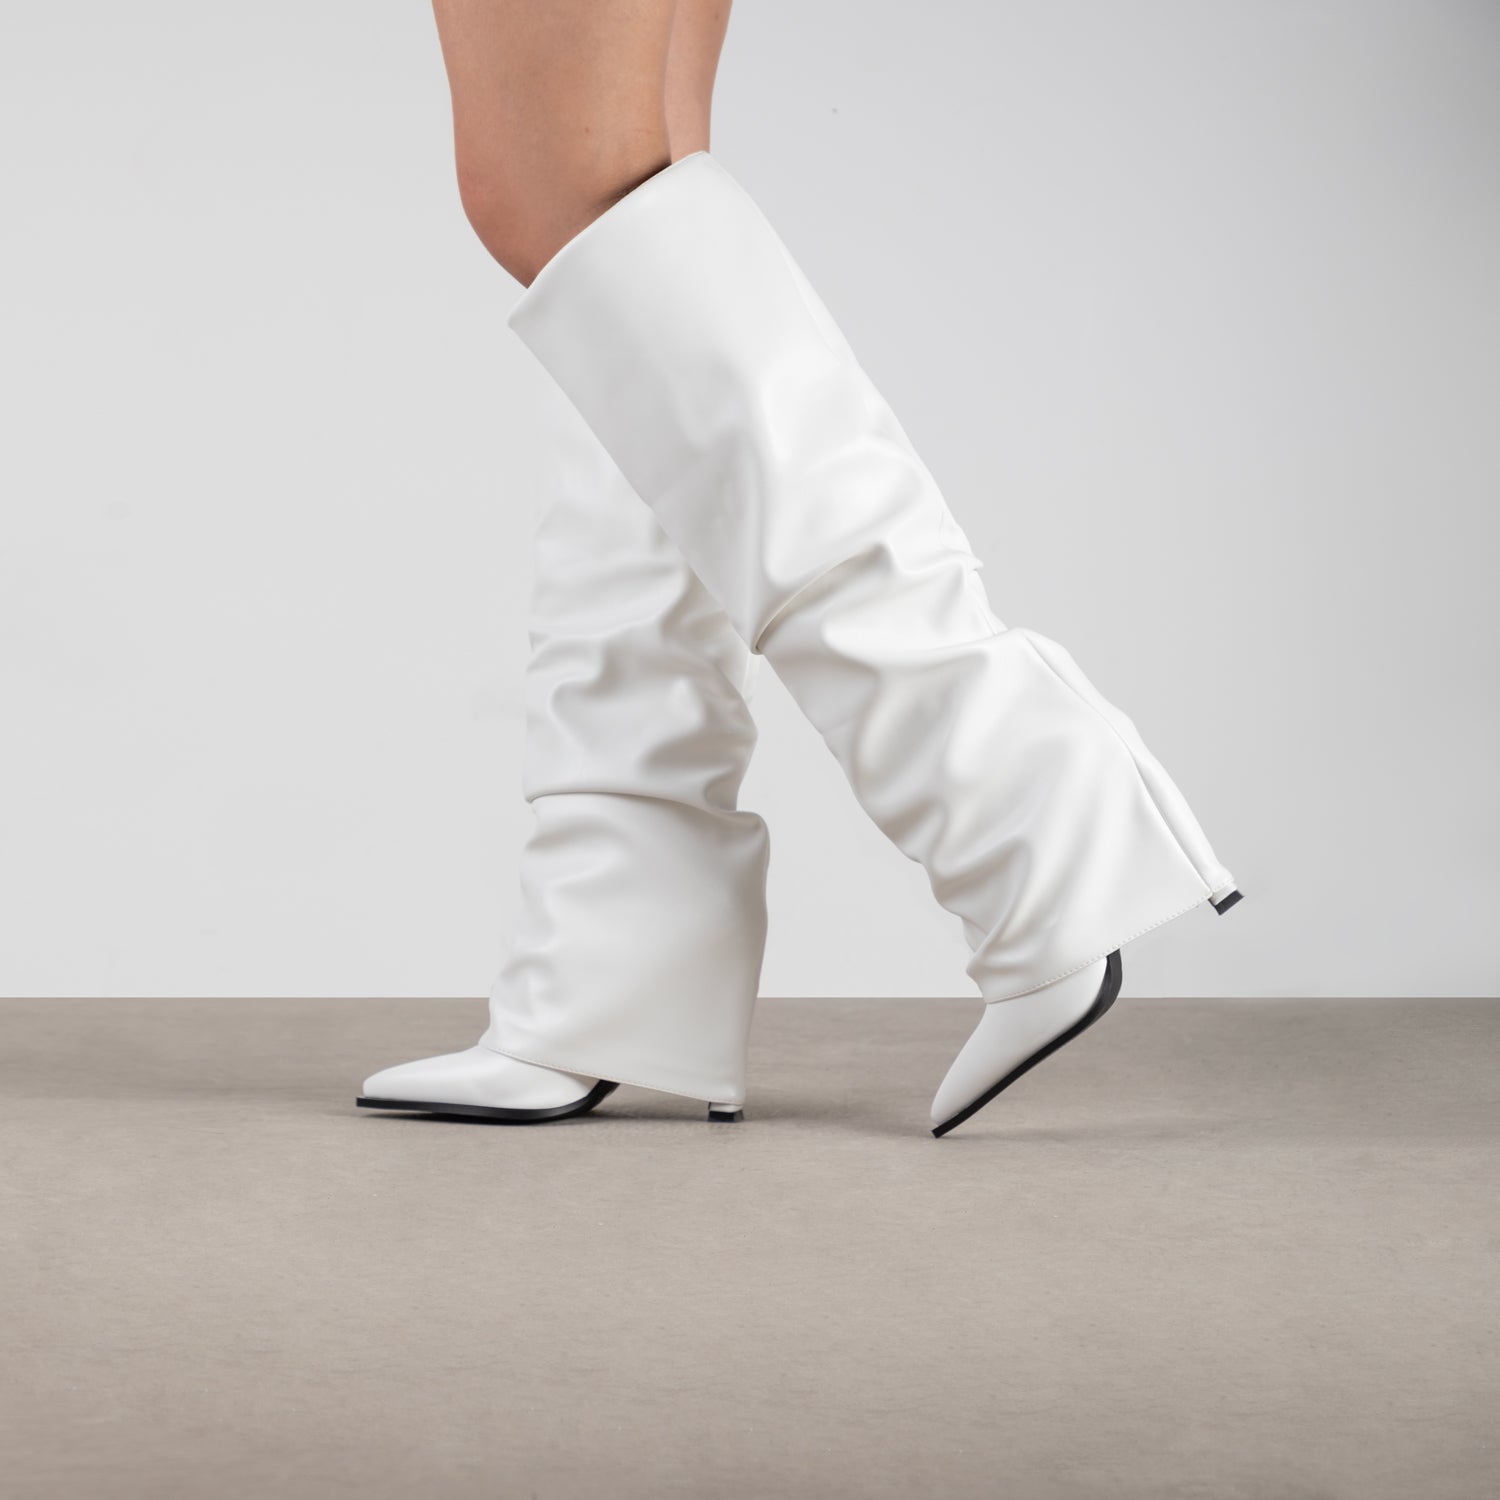 RAID Grandeur Knee High Boots in White